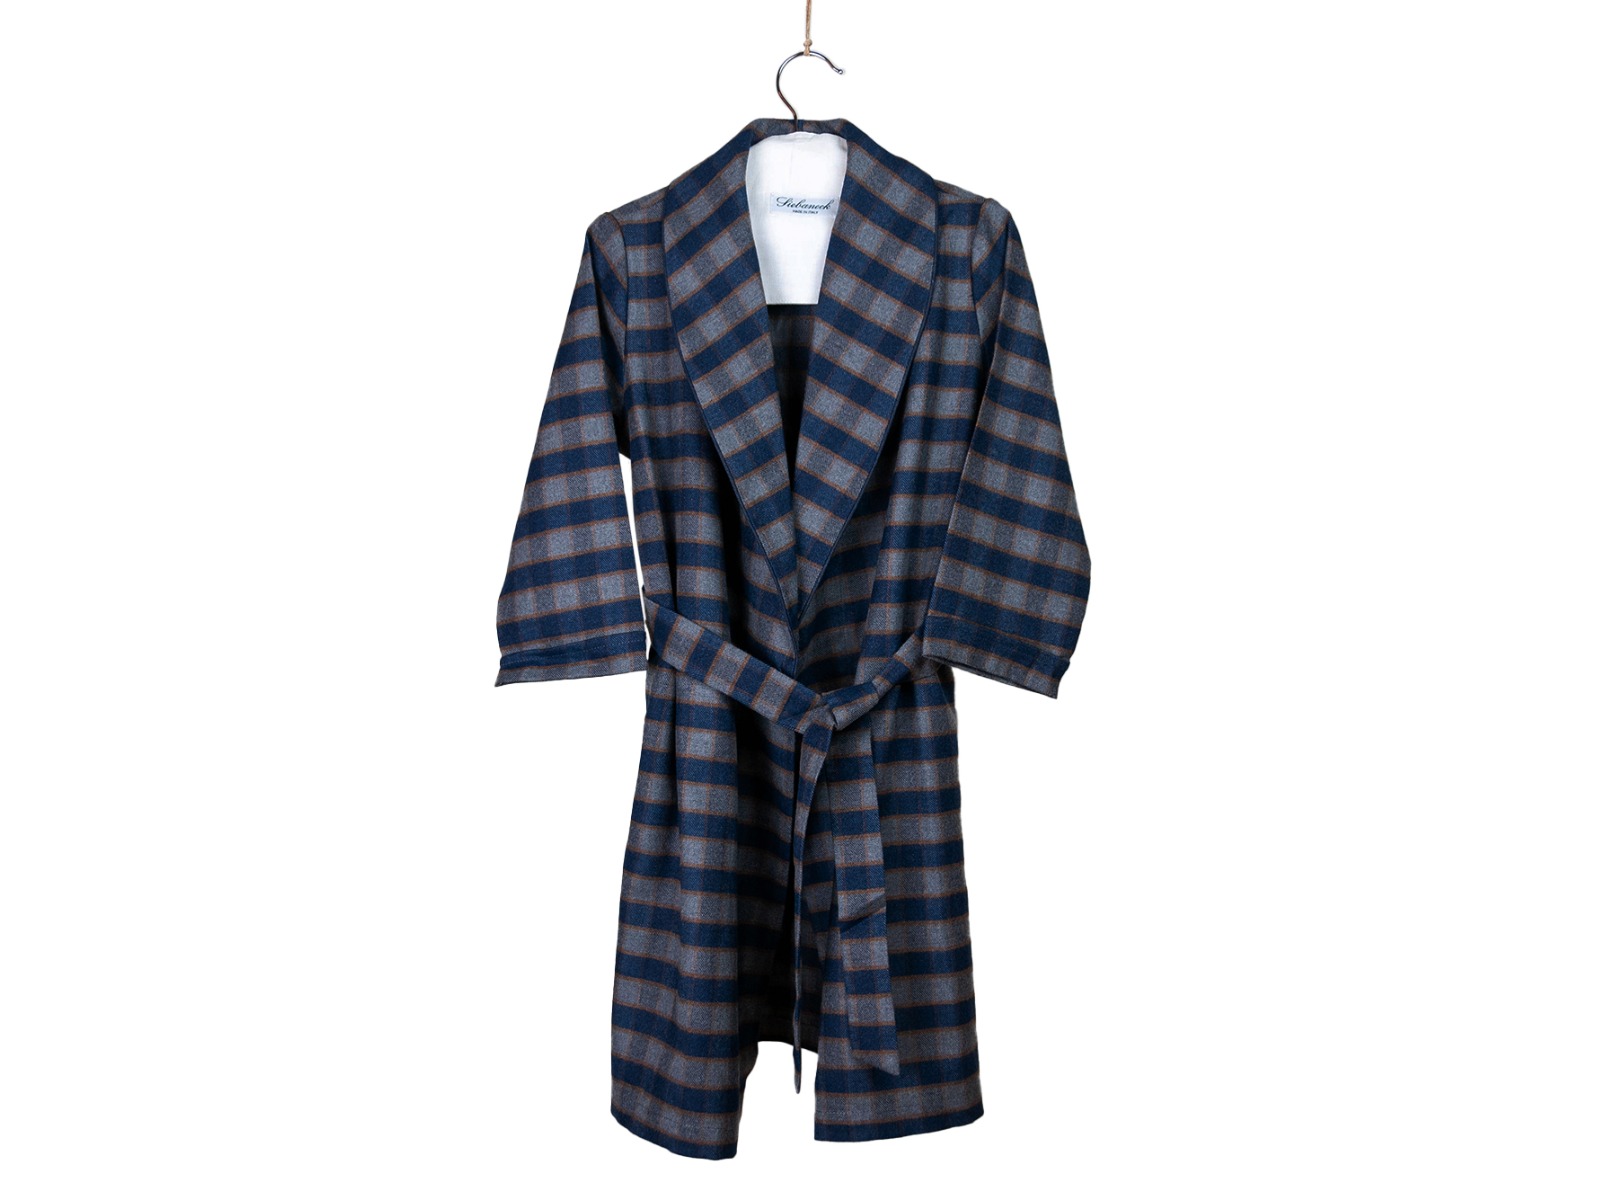 Siebaneck, i pigiami artigianali italiani: - unisex - mod. 11 Bis unisex scozzese blu grigio marrone profilo blu